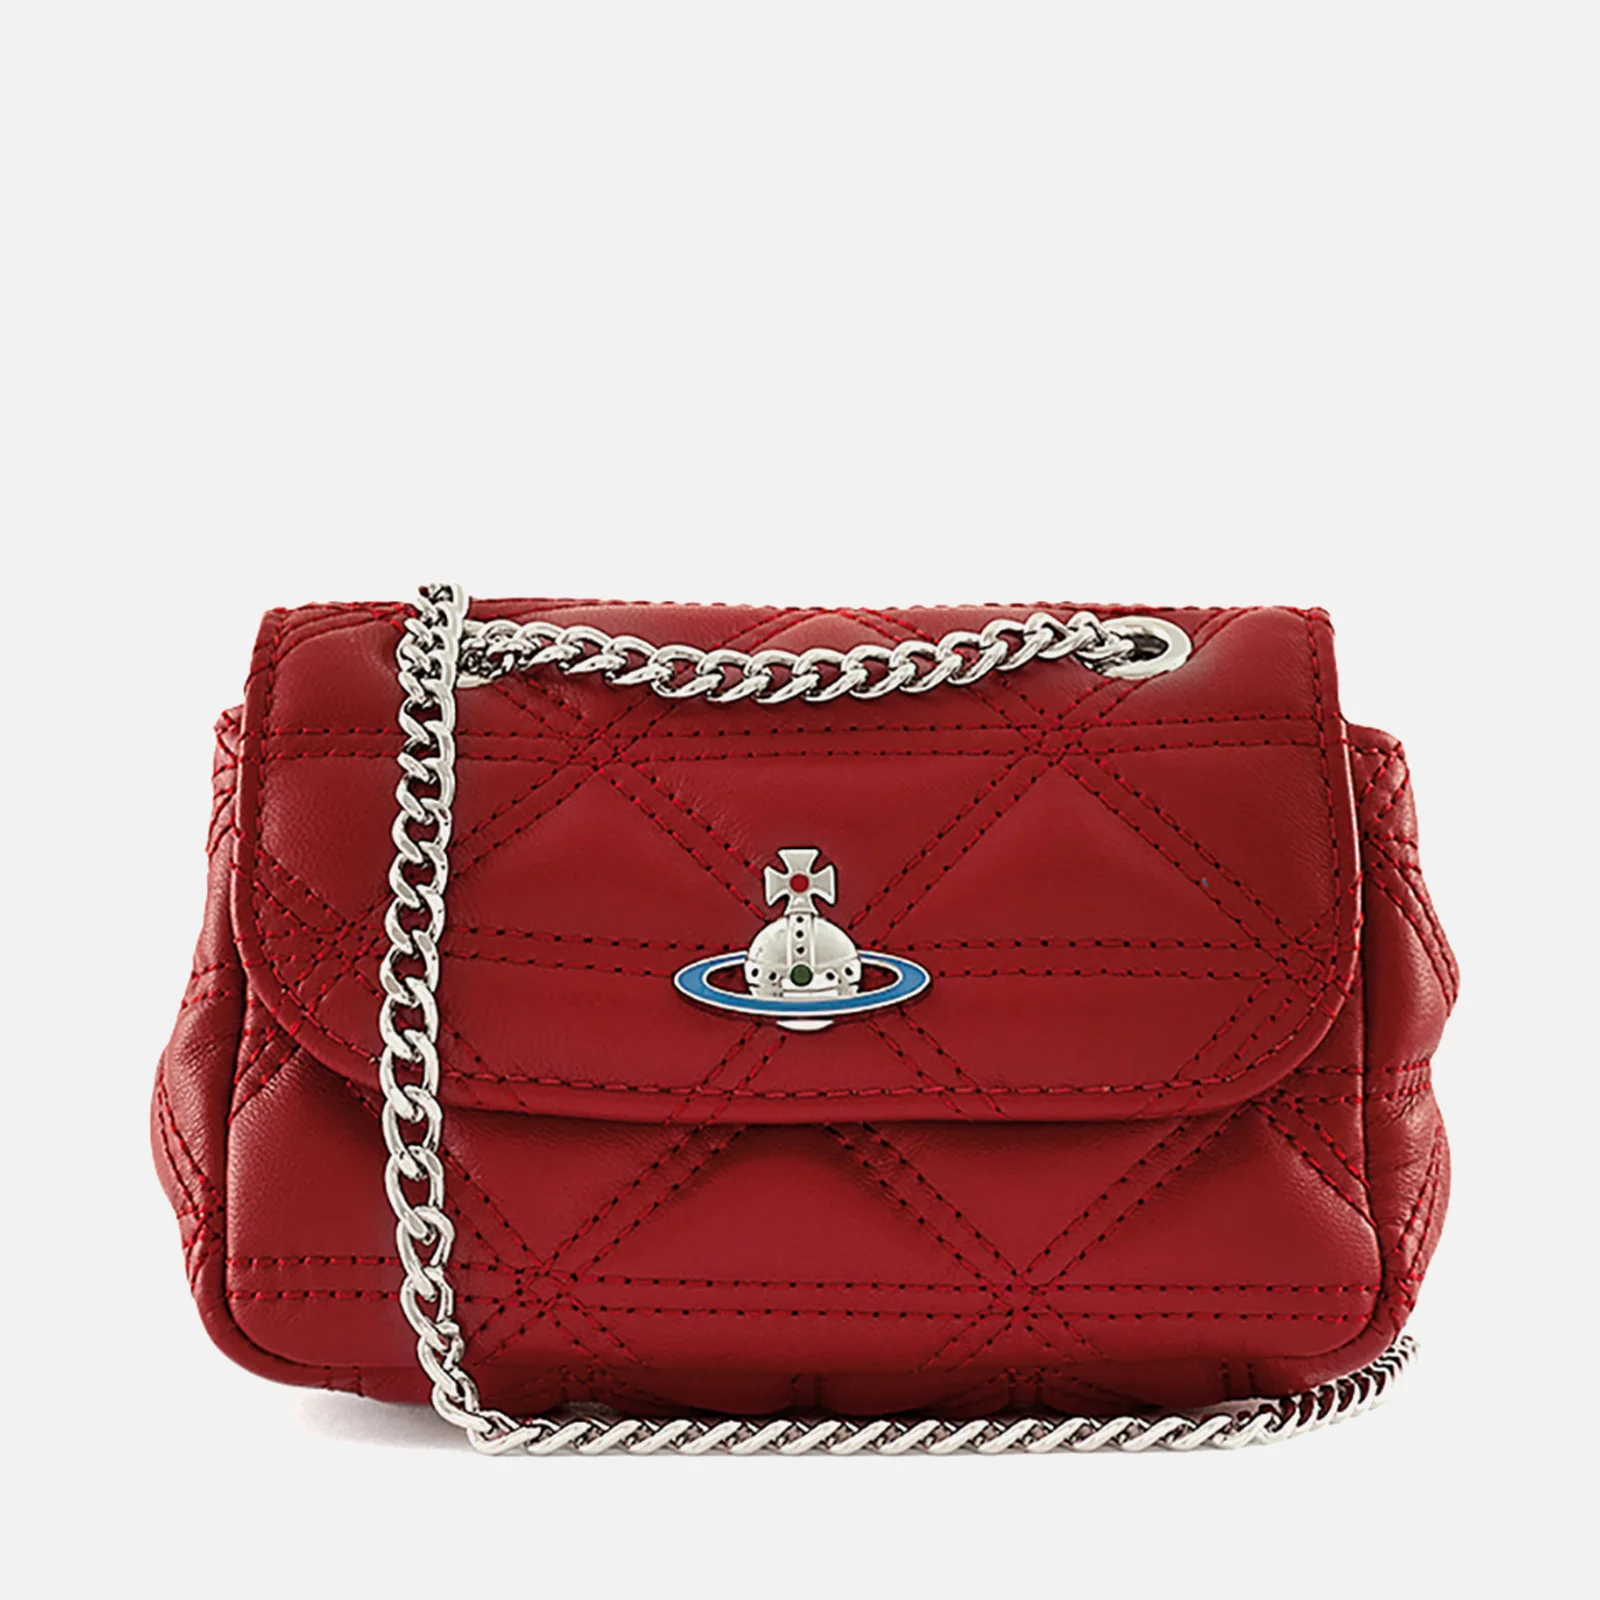 Vivienne Westwood Harlequin Nappa Leather Bag Image 1